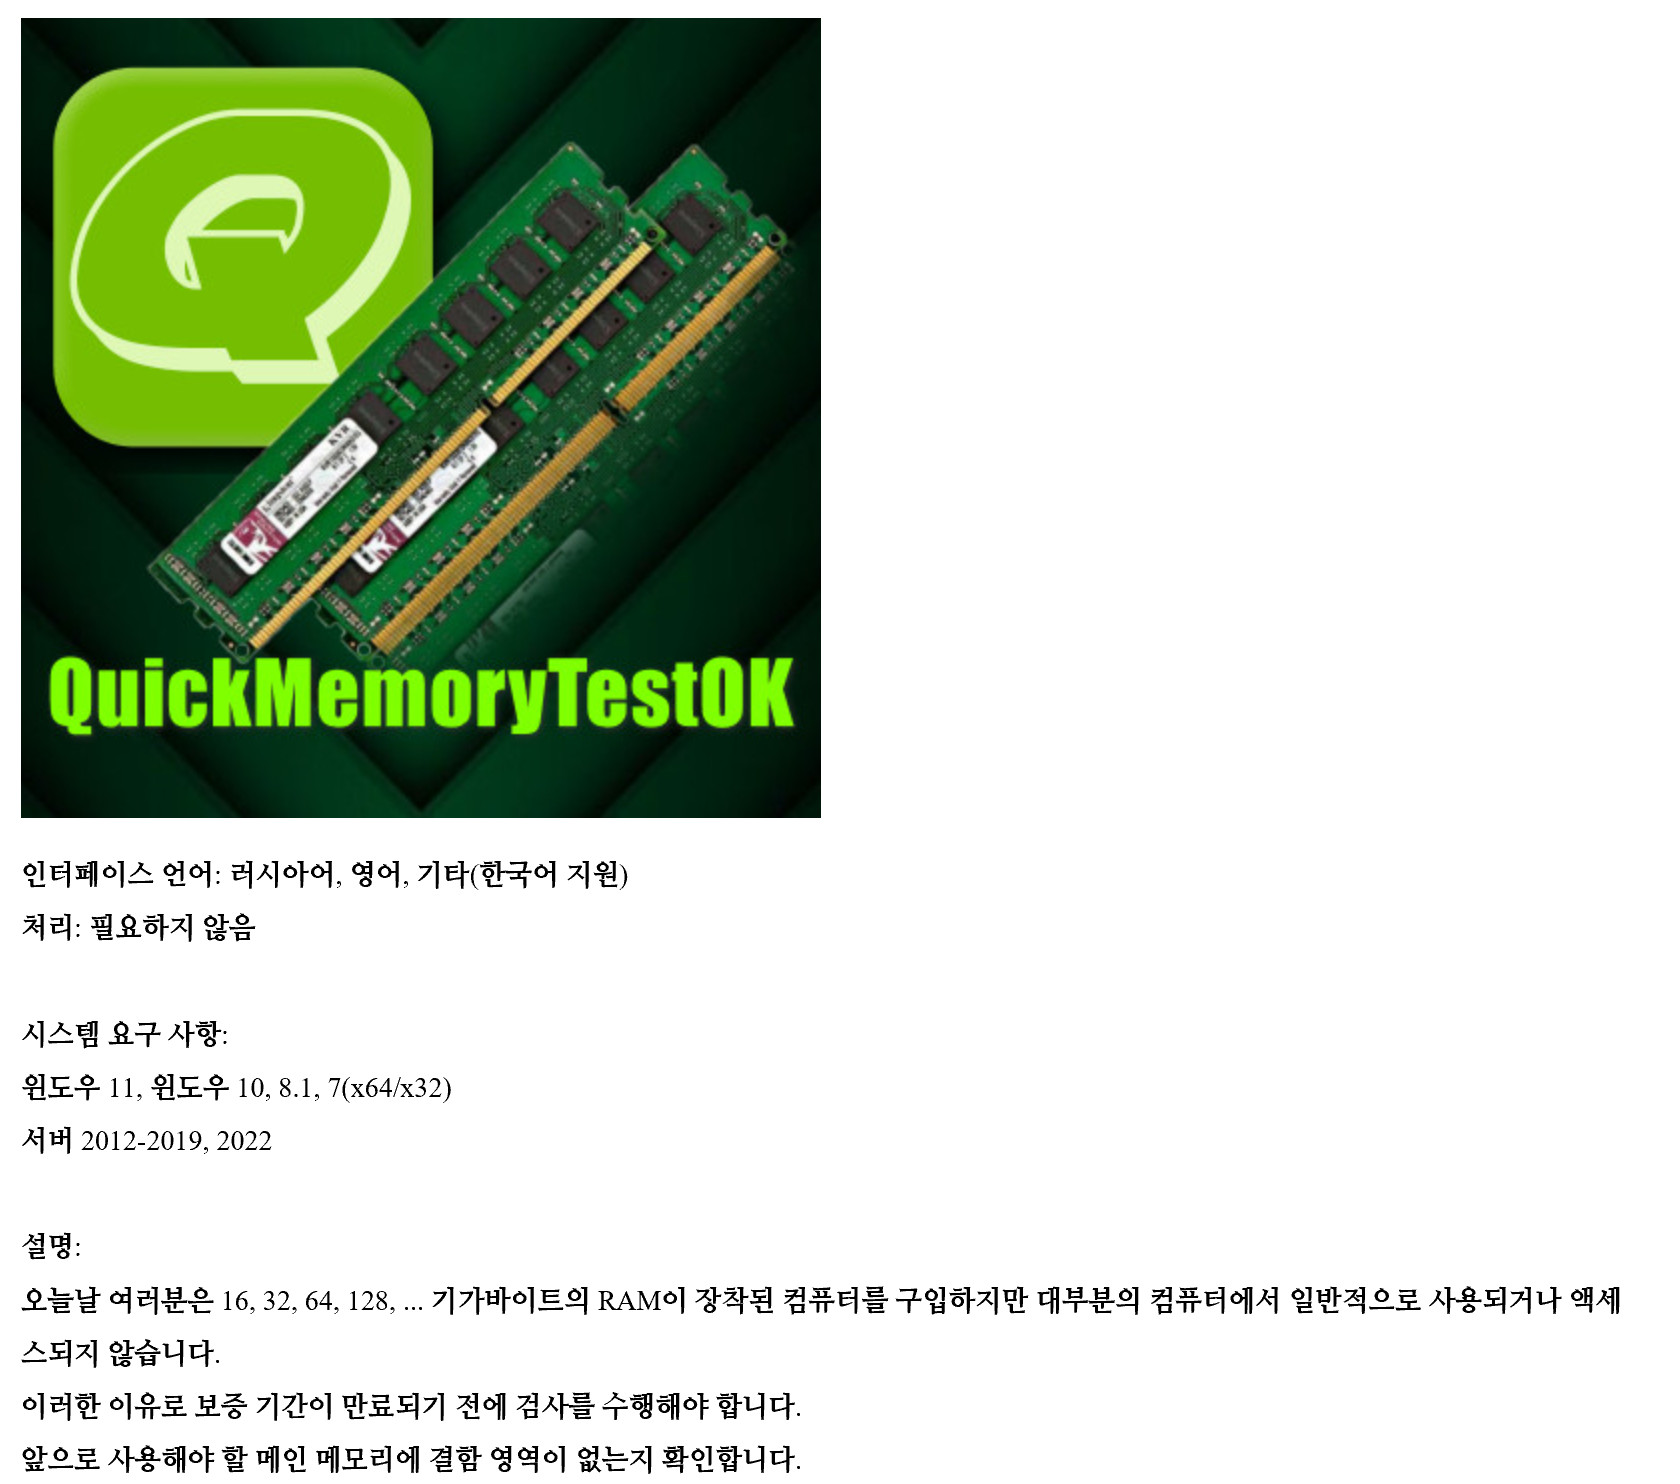 for windows download QuickMemoryTestOK 4.61